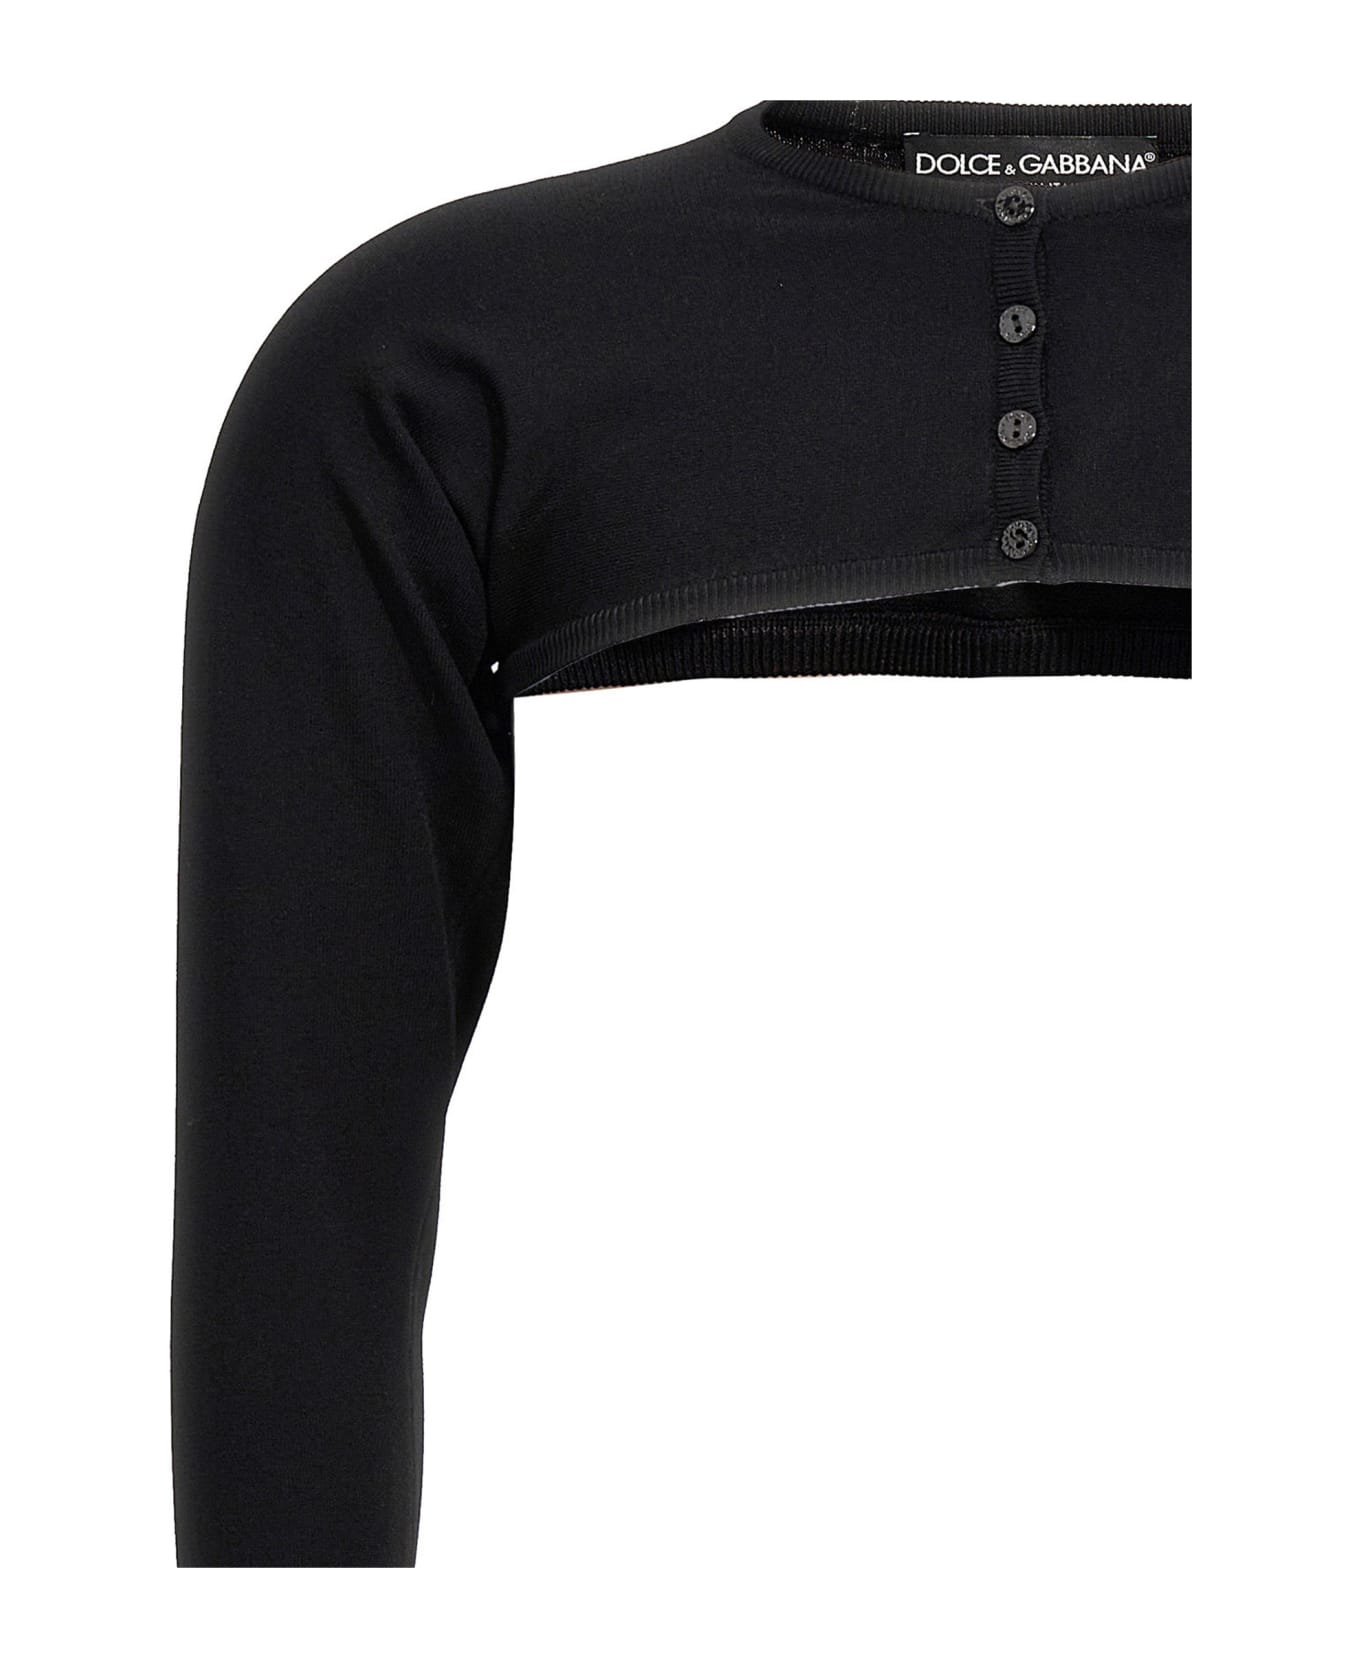 Dolce & Gabbana 'kim Dolce&gabbana' Shoulder Cover - Black  